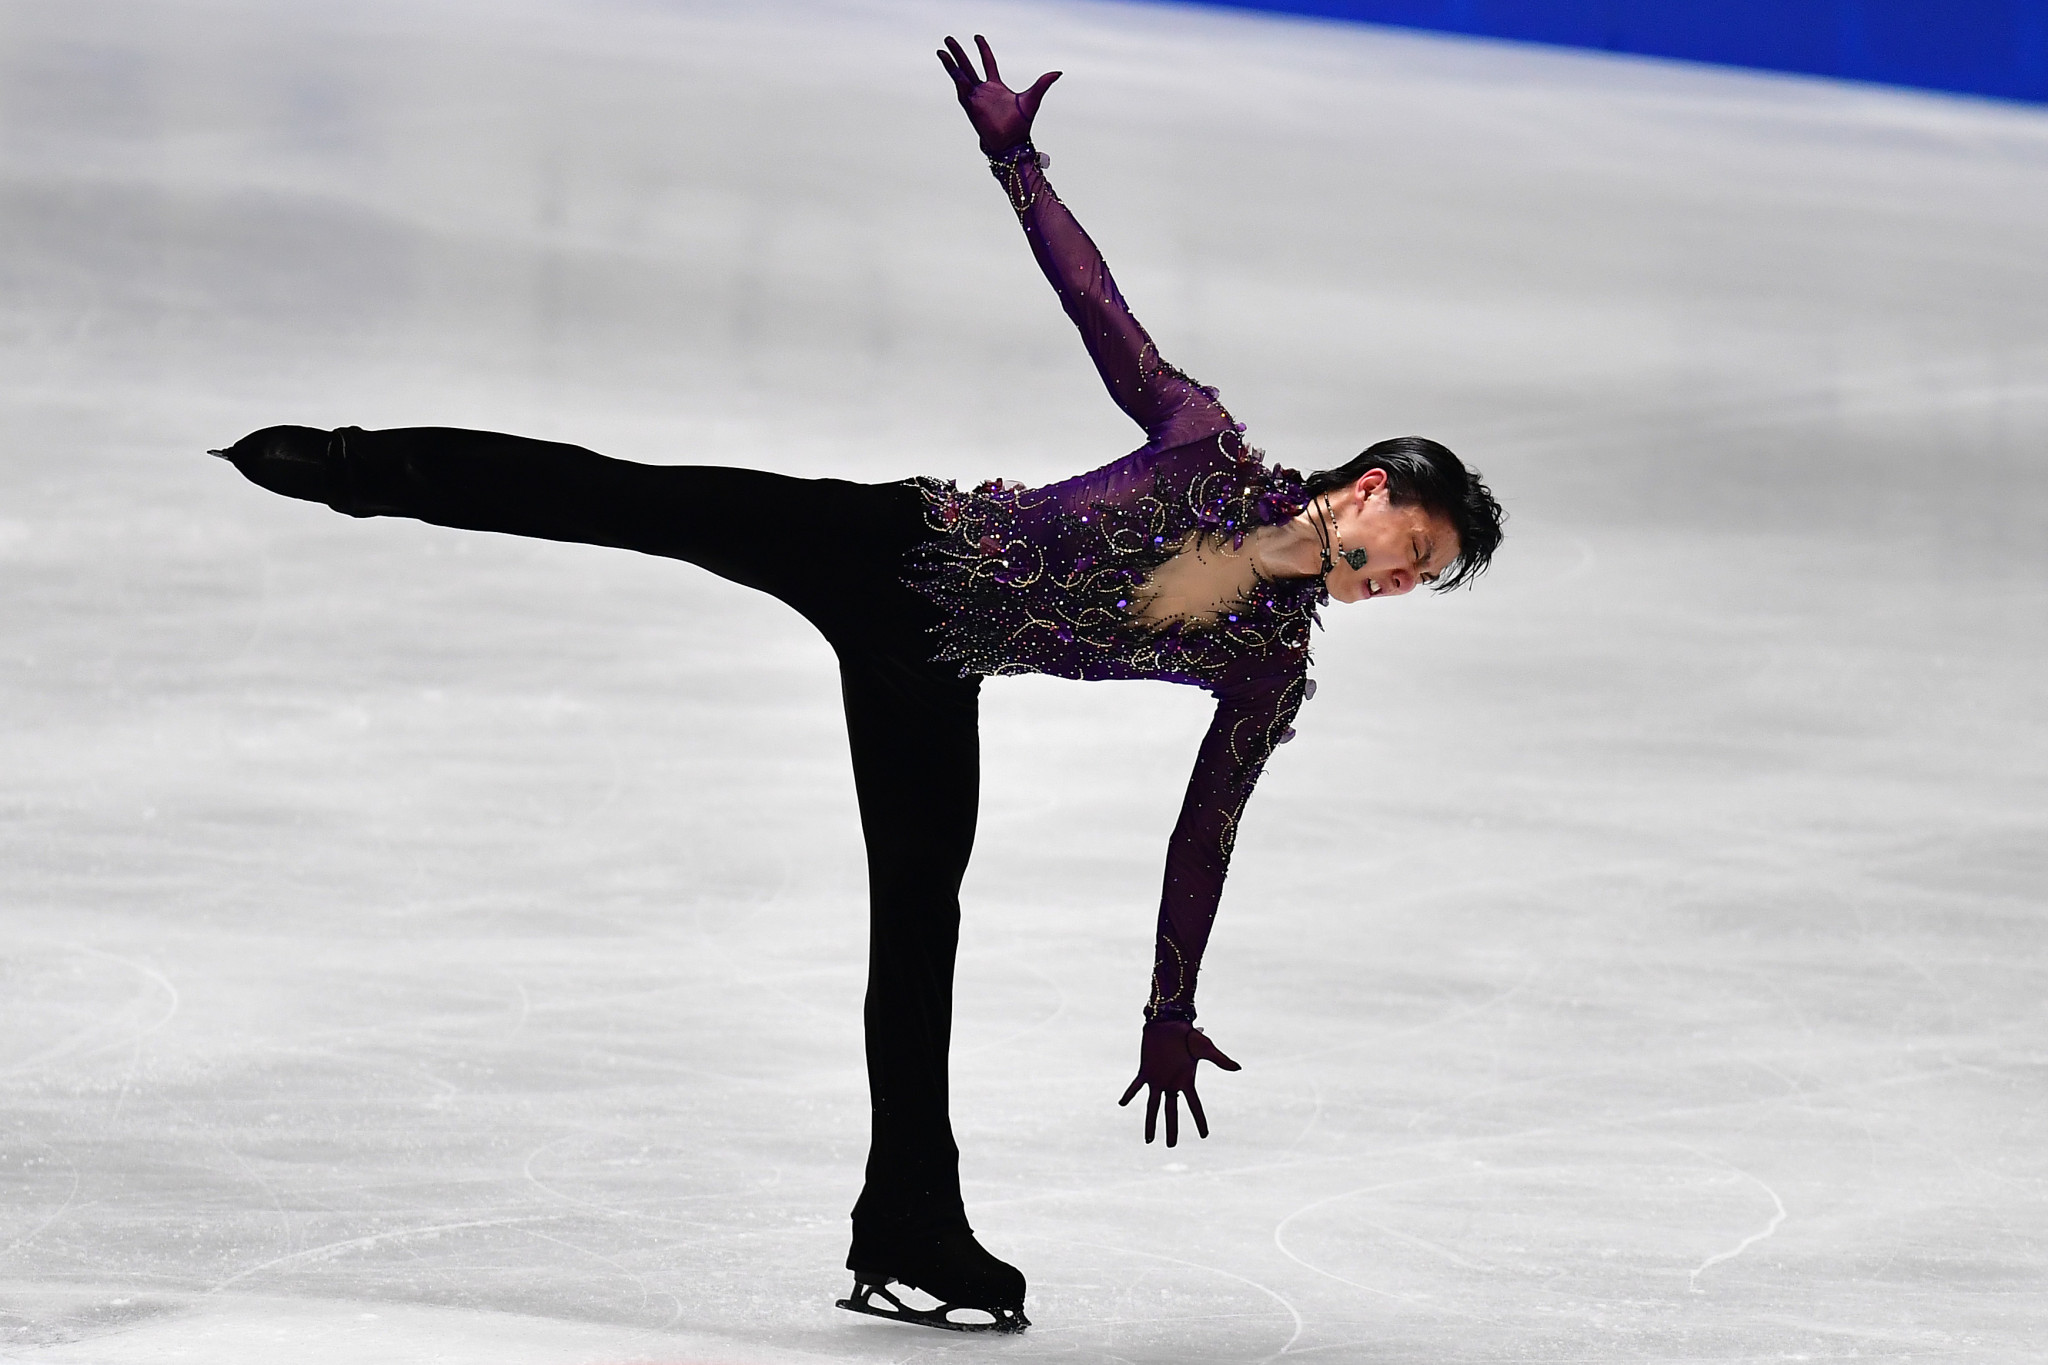 Asthmatic Hanyu to skip Grand Prix of Figure Skating season over COVID-19 concerns